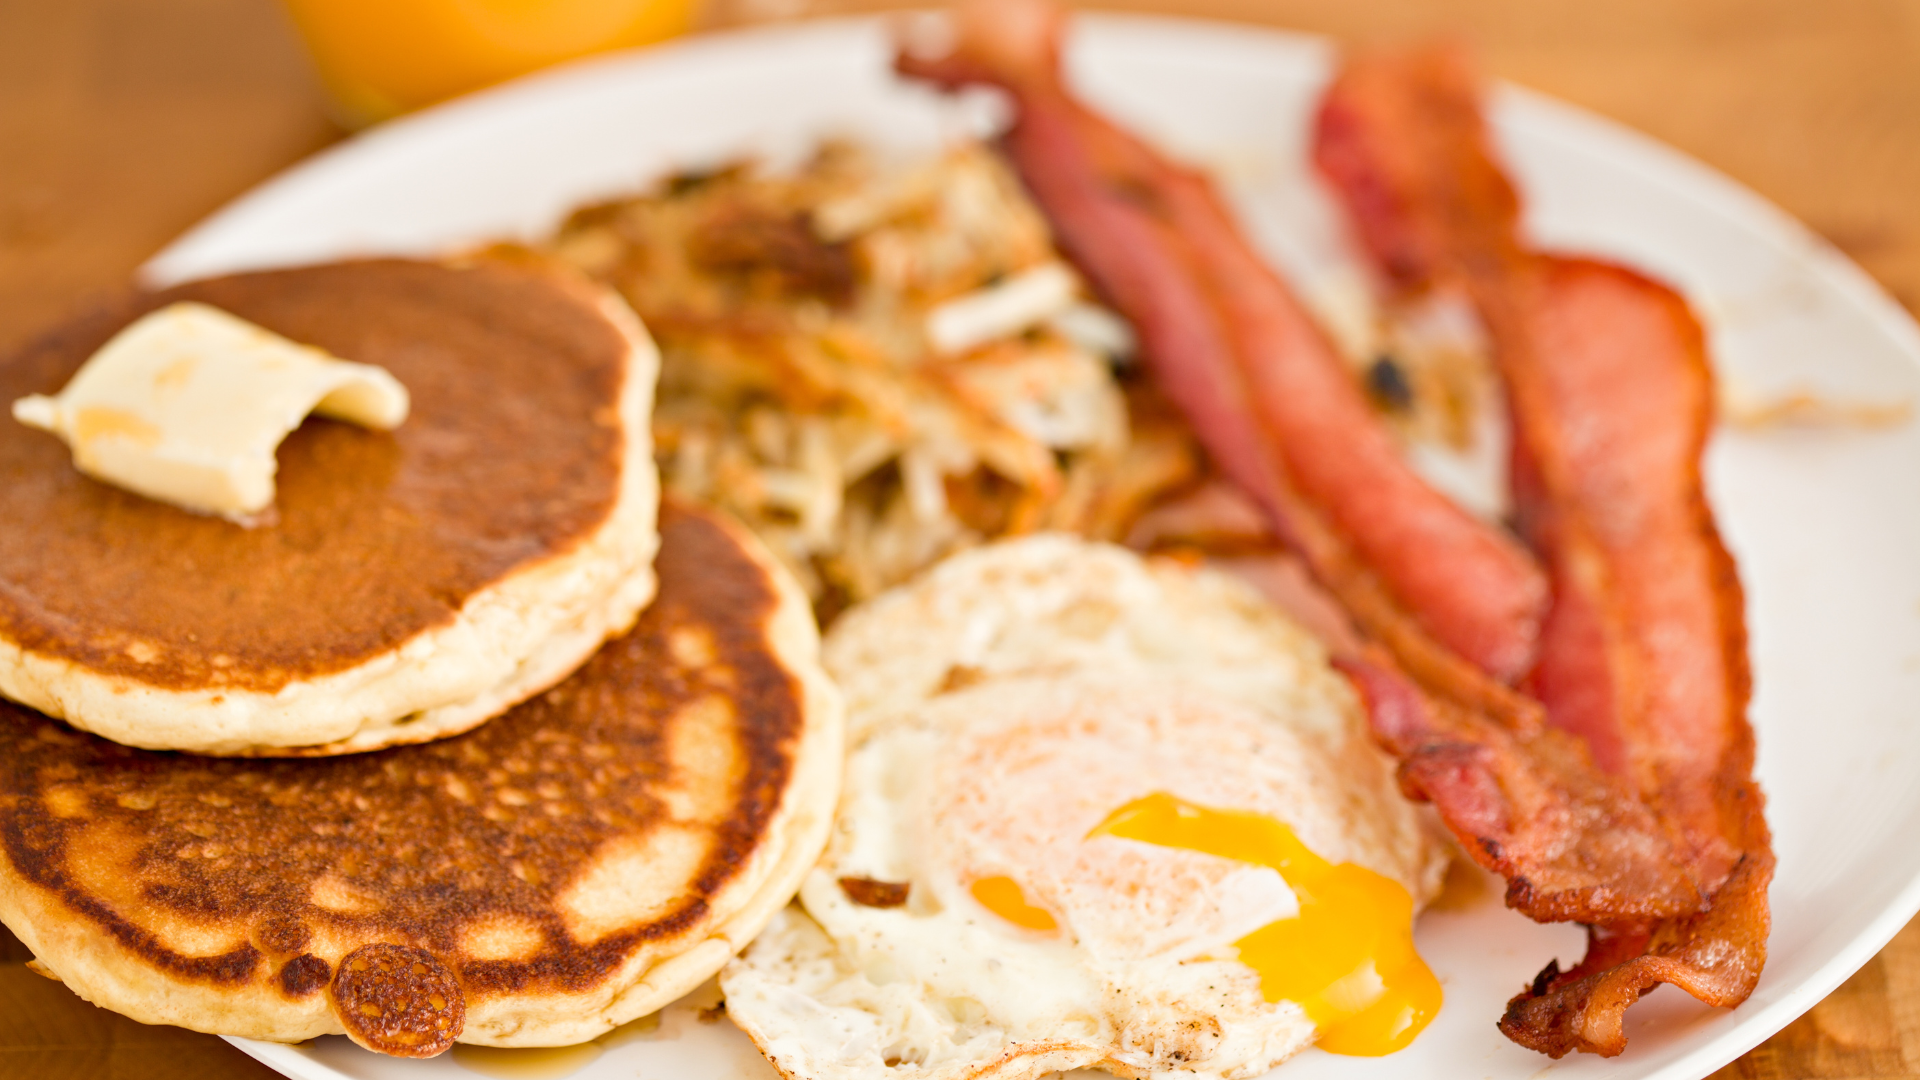 Local Breakfast Spots to Kickstart Your Day